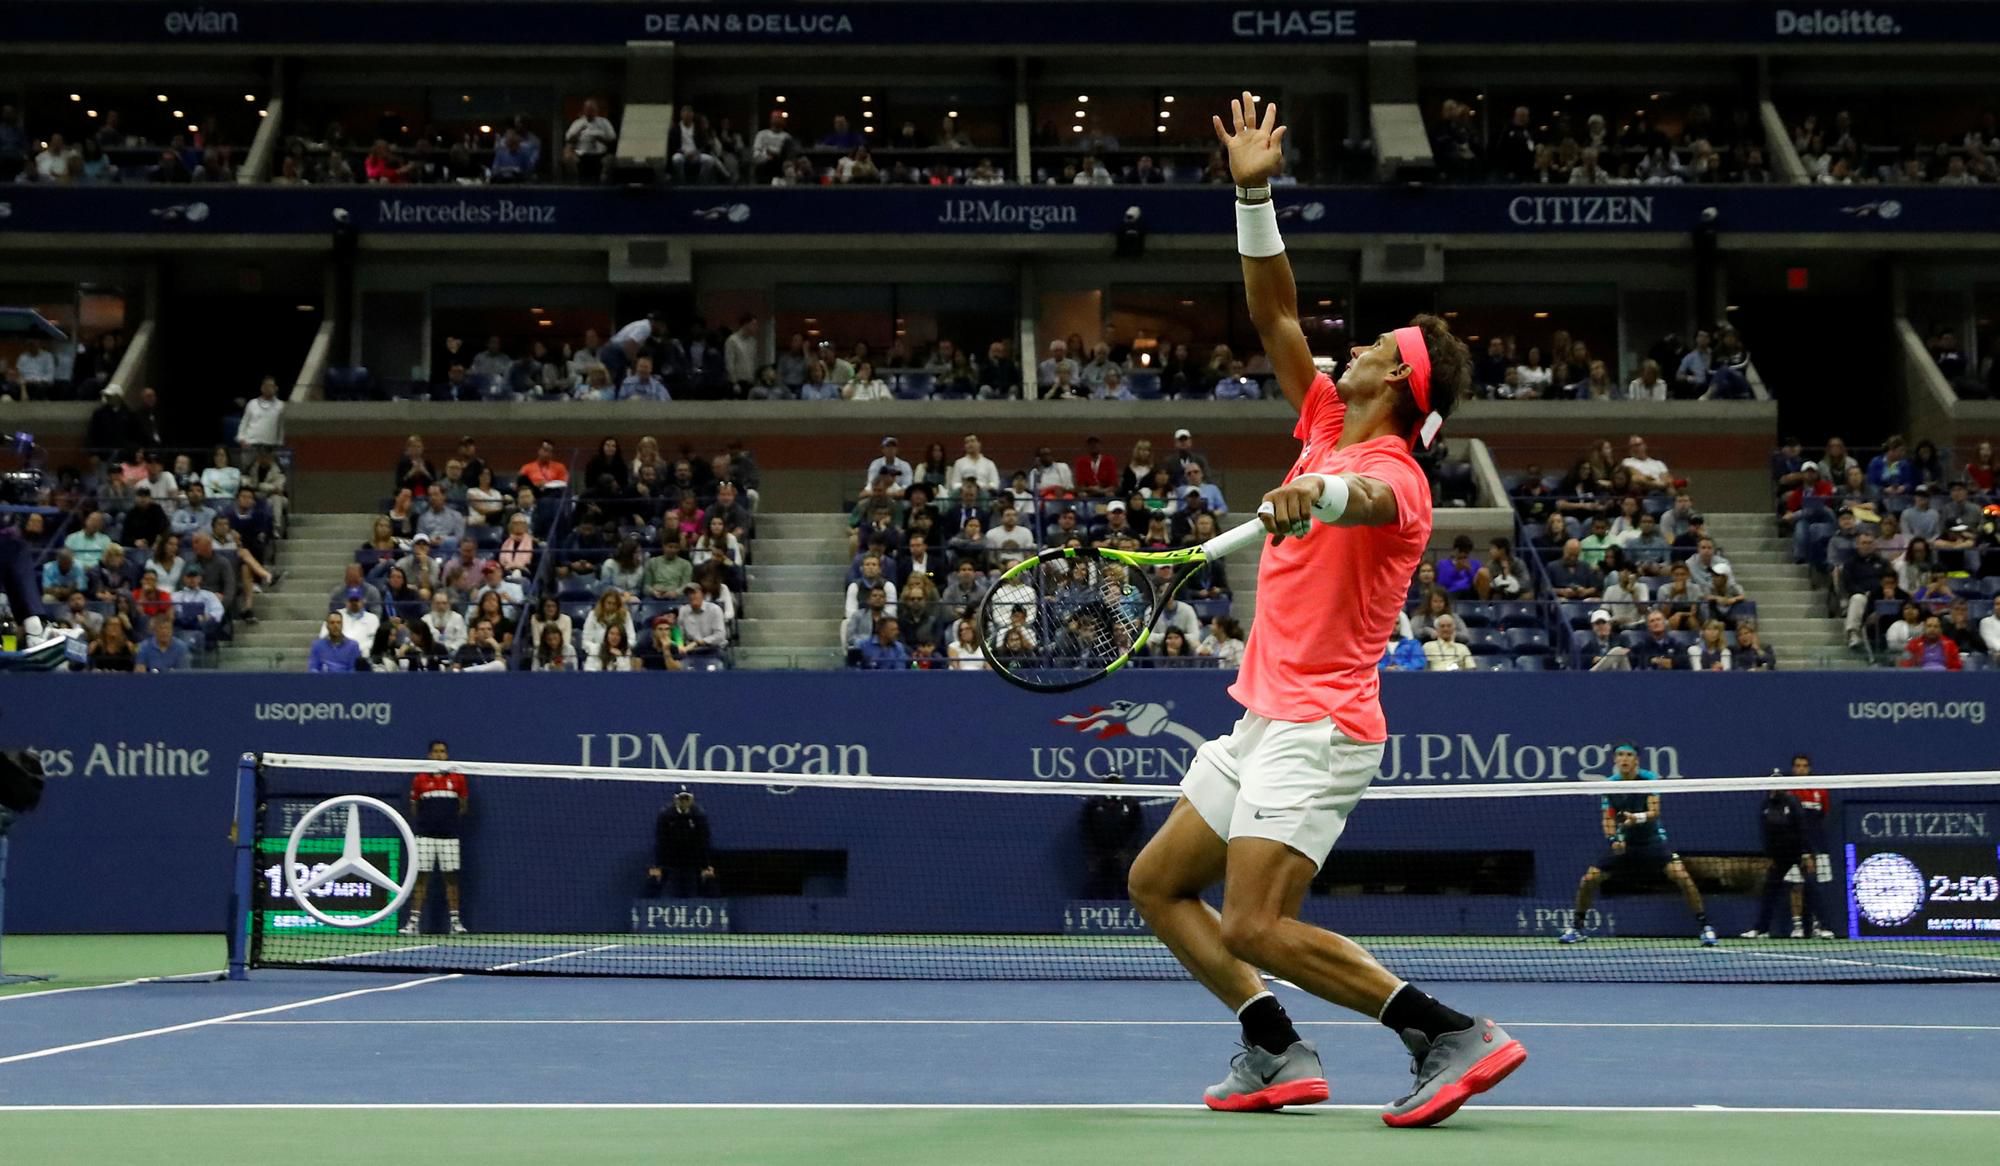 Rafael Nadal na US Open.